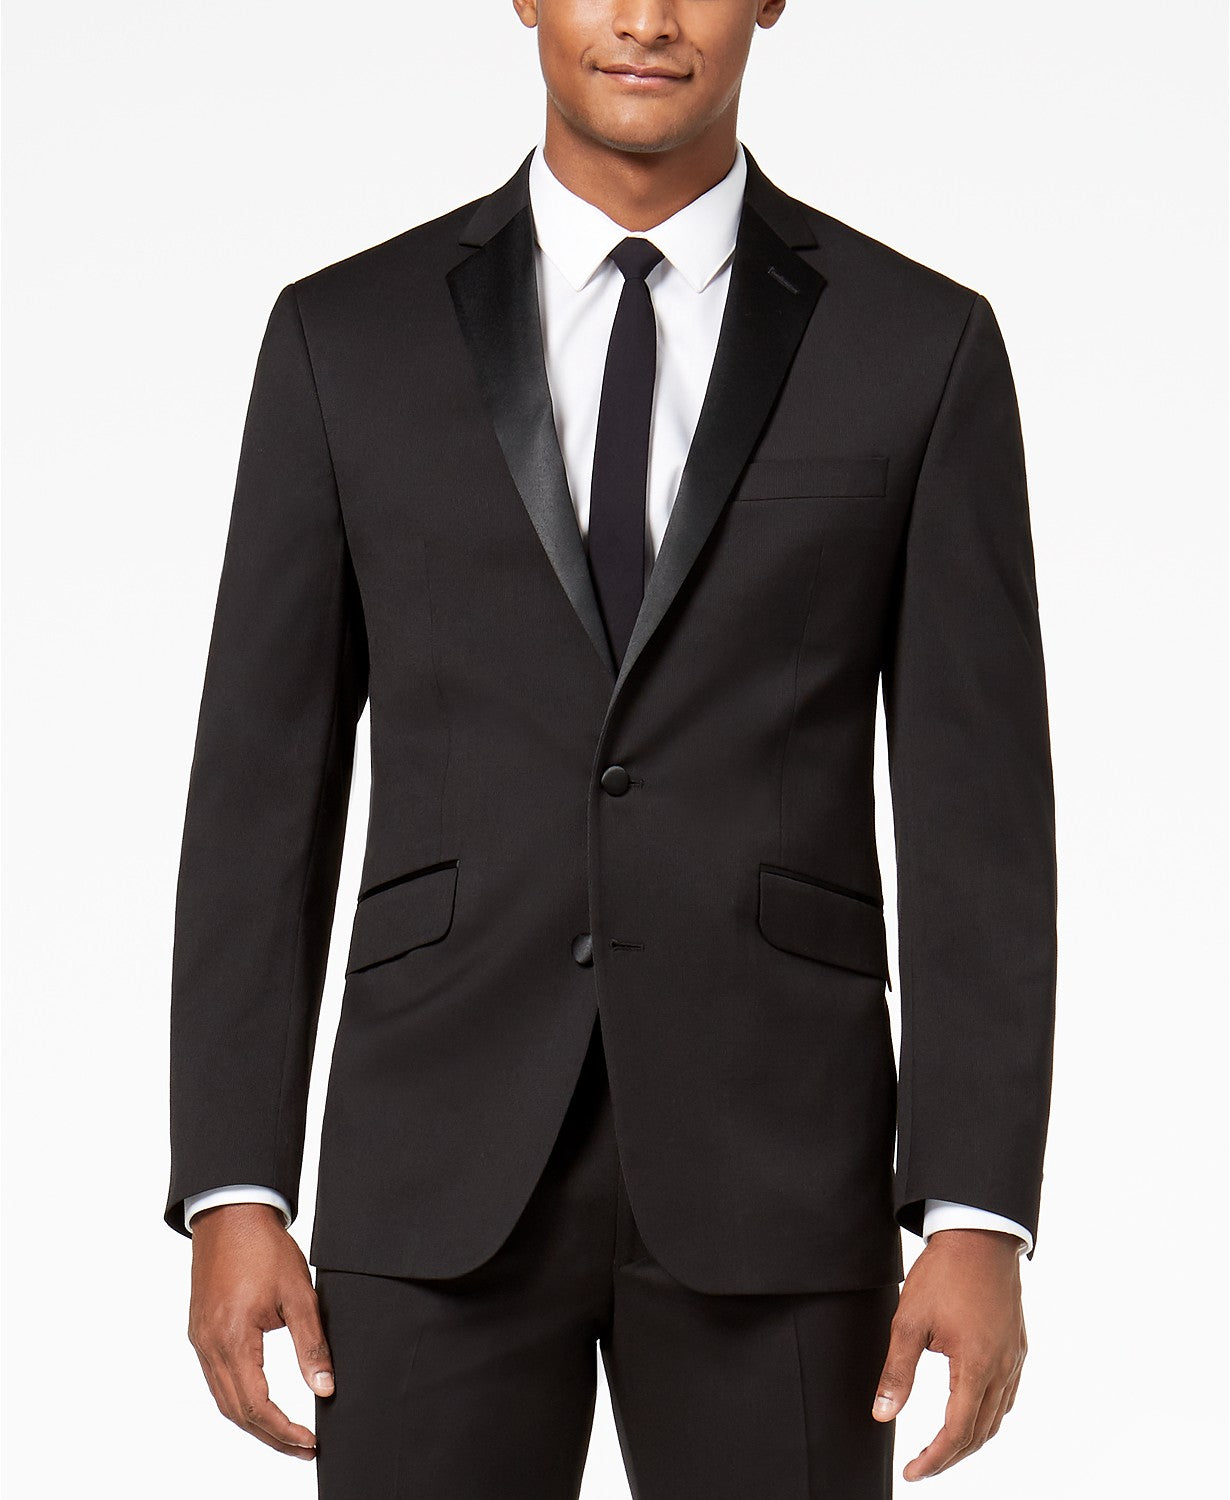 Kenneth Cole Flex Slim Fit Black Tuxedo Suit Jacket 36S JACKET ONLY / Two Button